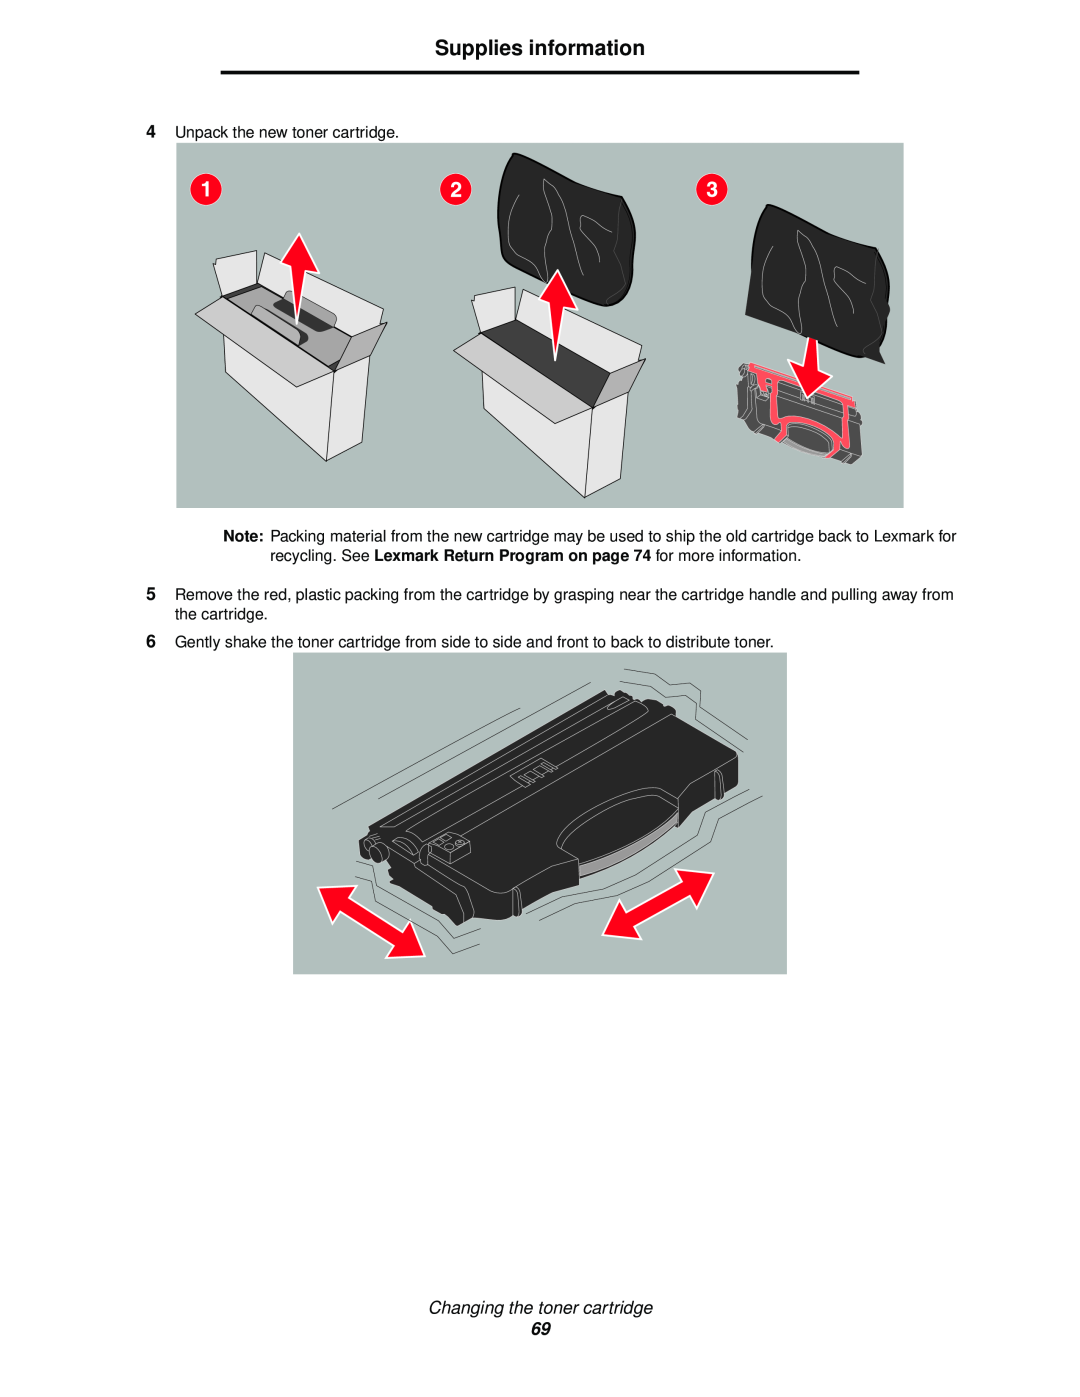 Lexmark 120 manual Supplies information, Changing the toner cartridge, Unpack the new toner cartridge 